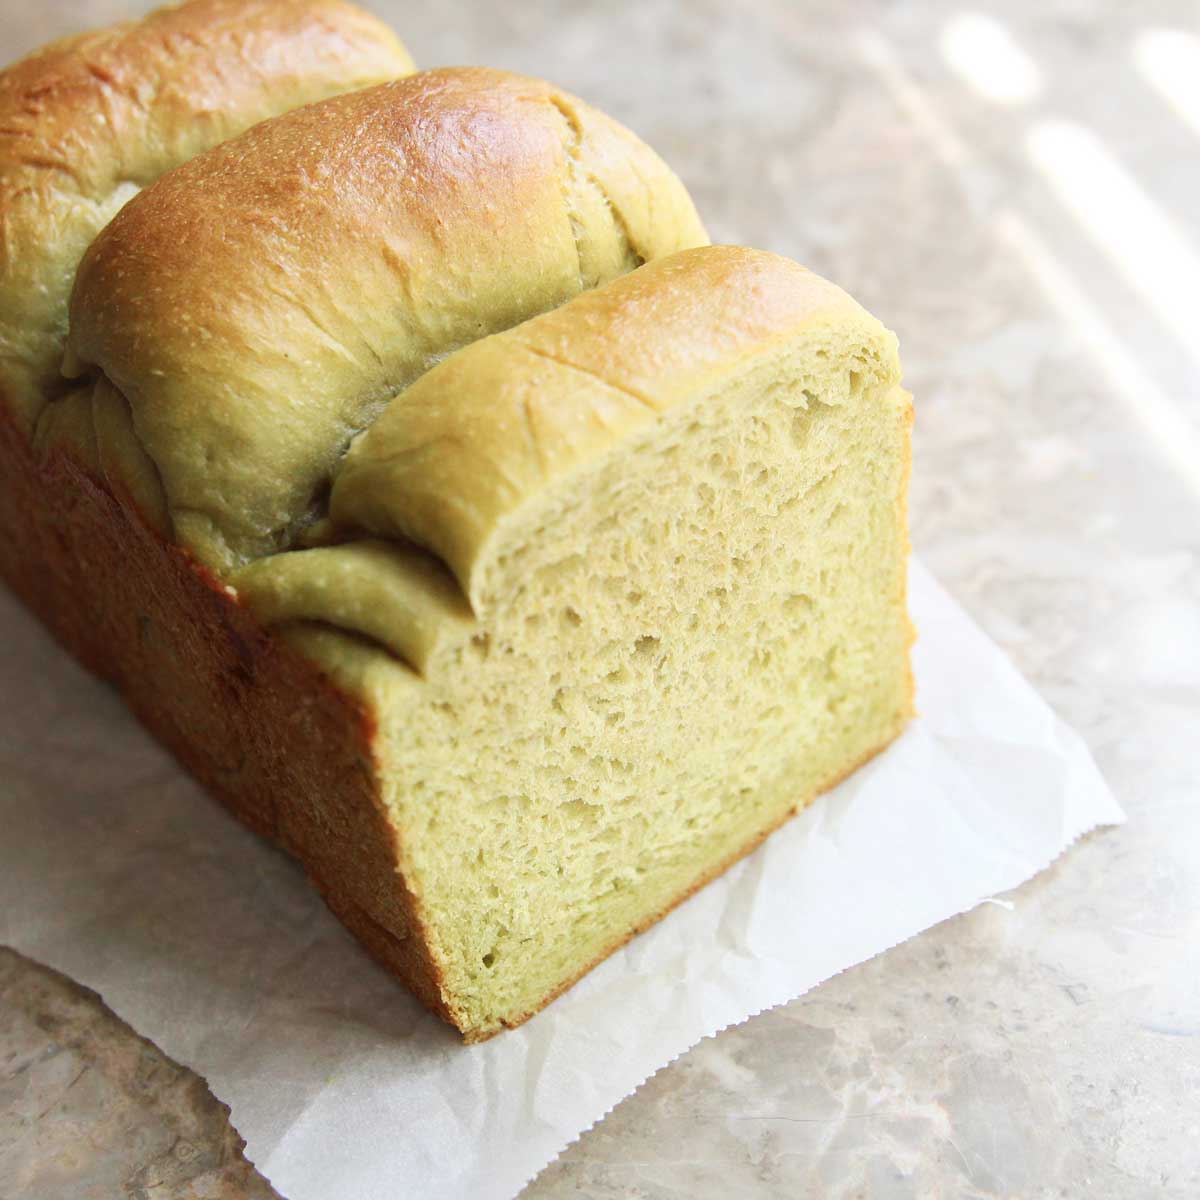 Soft & Fluffy Vegan Avocado Bread (Yeast Bread) Recipe - Roasted Corn Naan